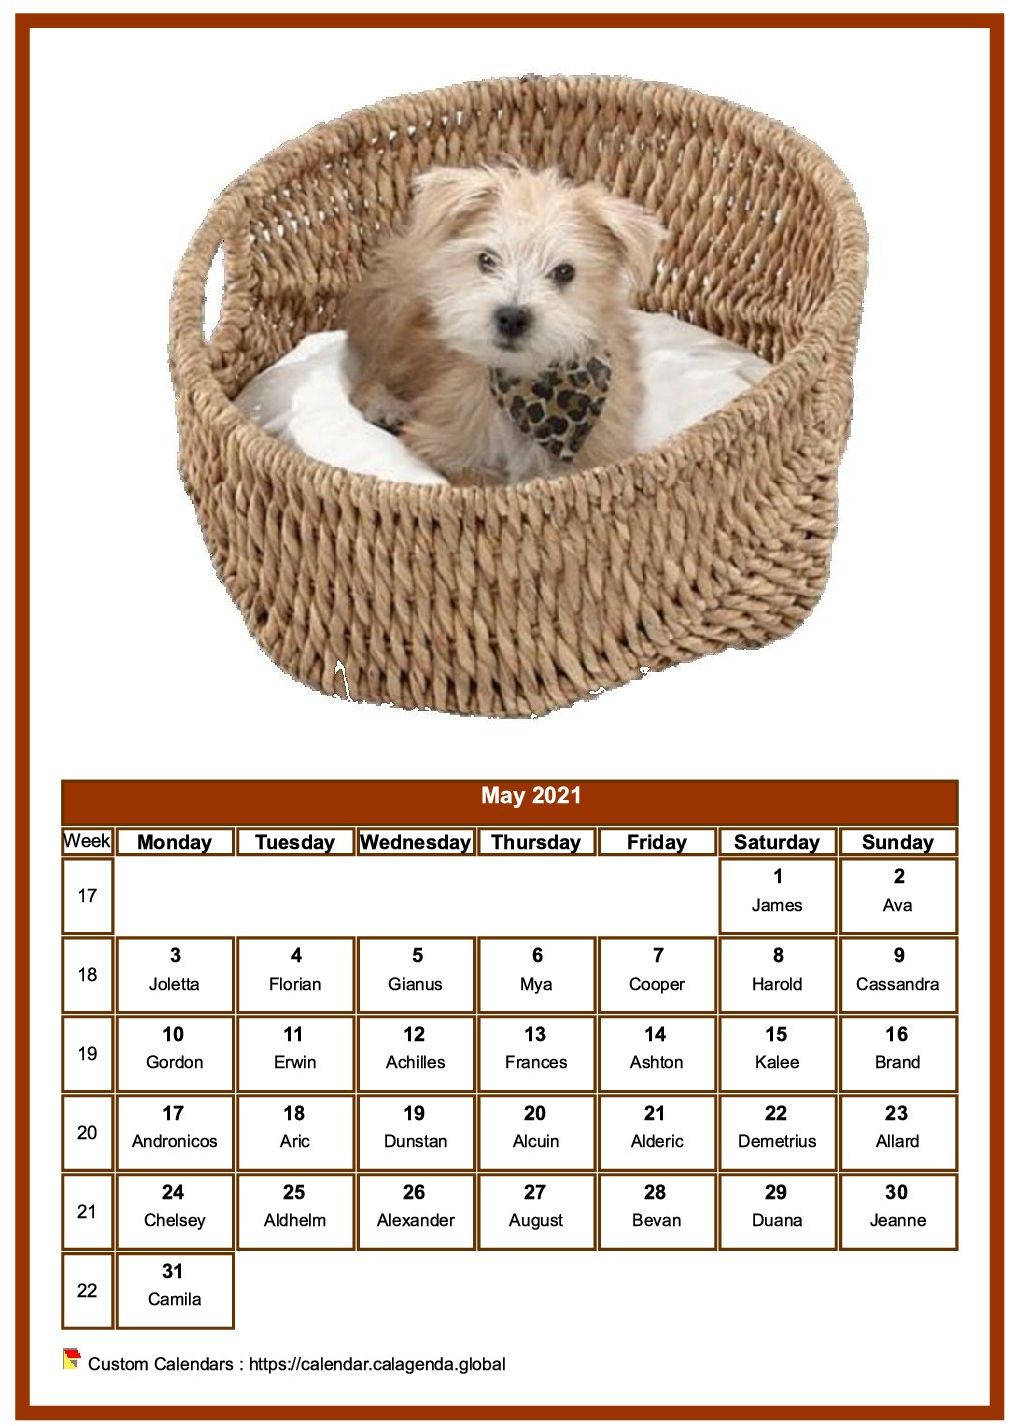 Calendar May 2021 dogs